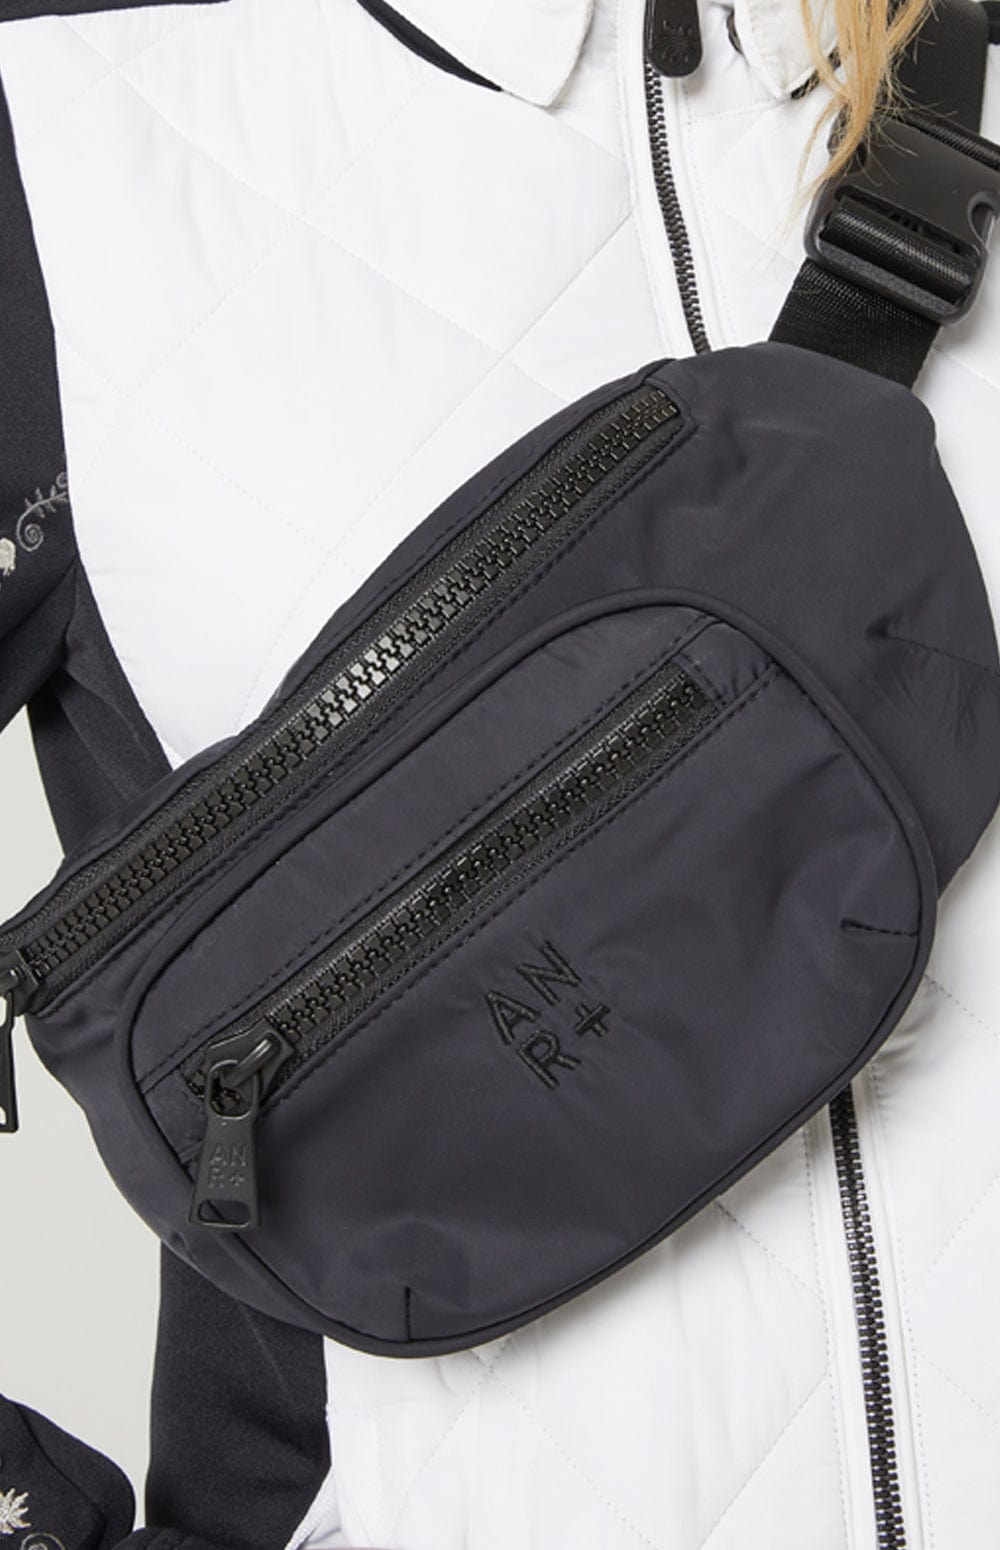 ANR Accessories Everyday Belt Bag | Black